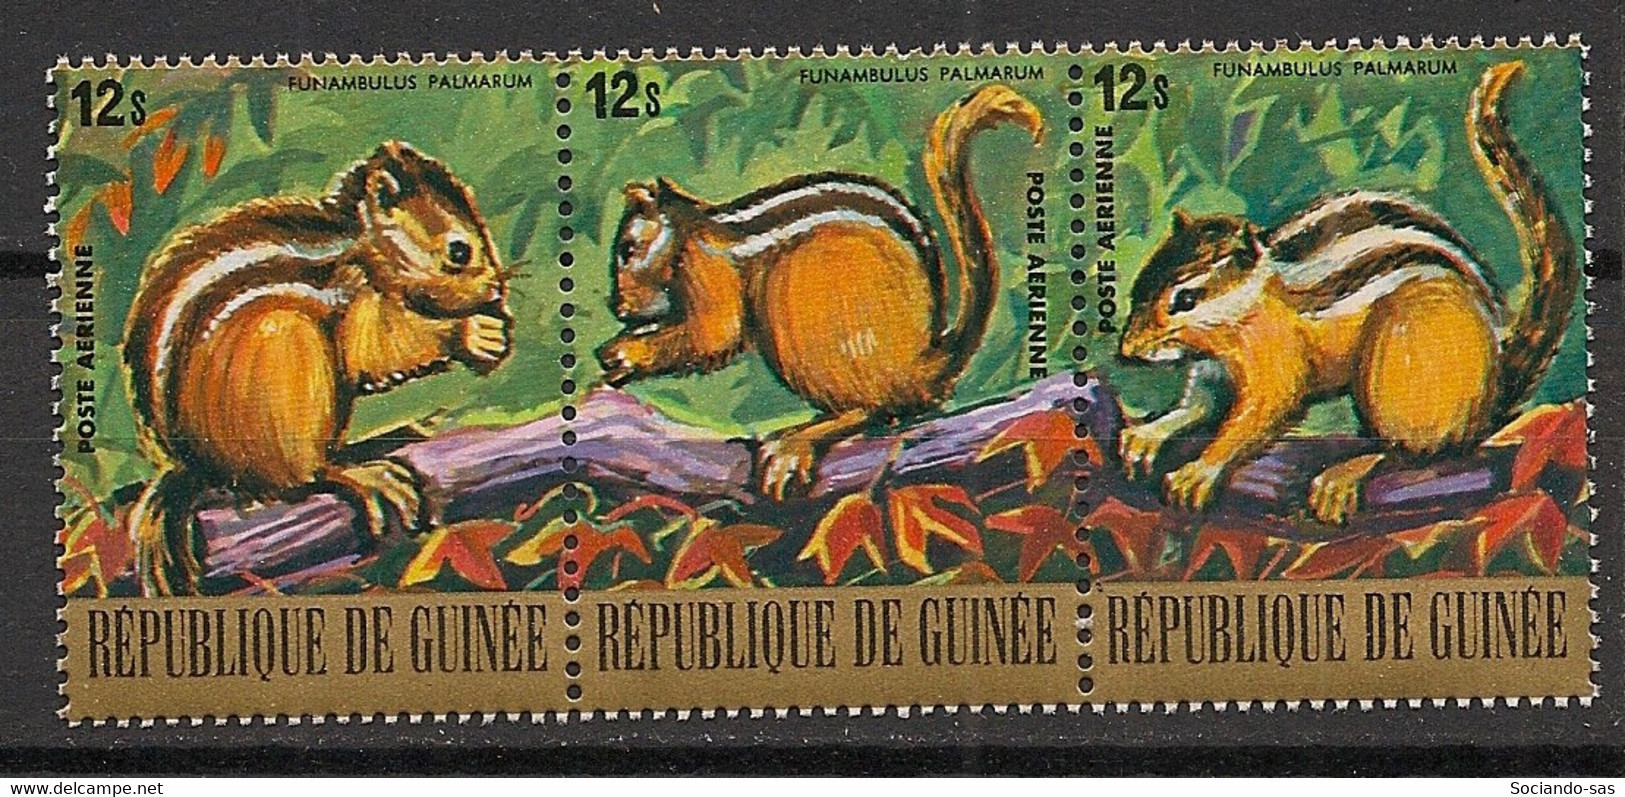 GUINEE - 1977 - Poste Aérienne PA N°YT. 128 à 130 - Ecureuil / Squirrel - Neuf Luxe ** / MNH / Postfrisch - Guinea (1958-...)